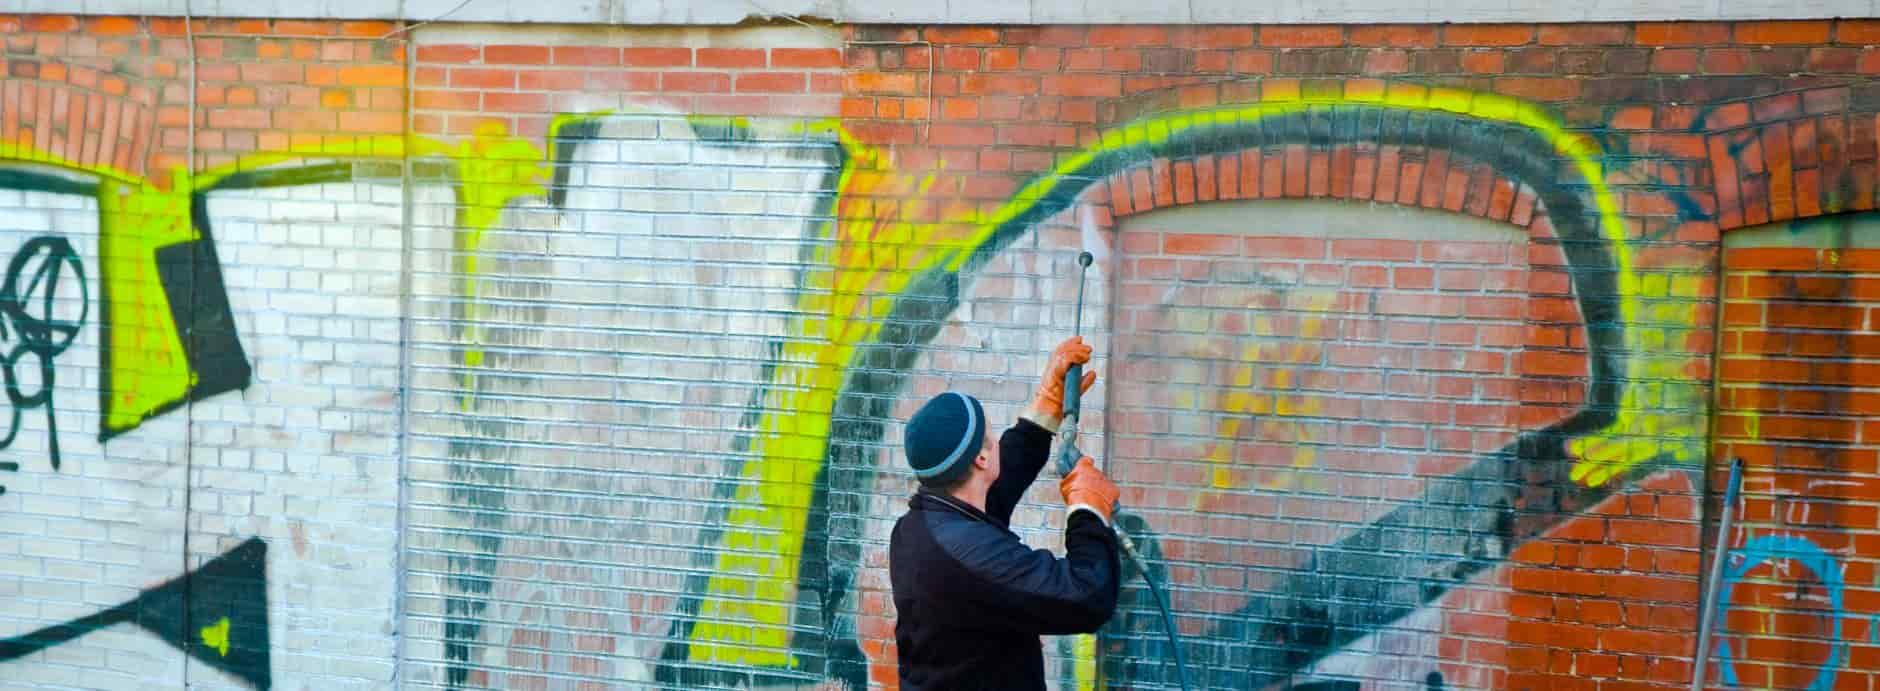 Graffiti Removal in Pelton